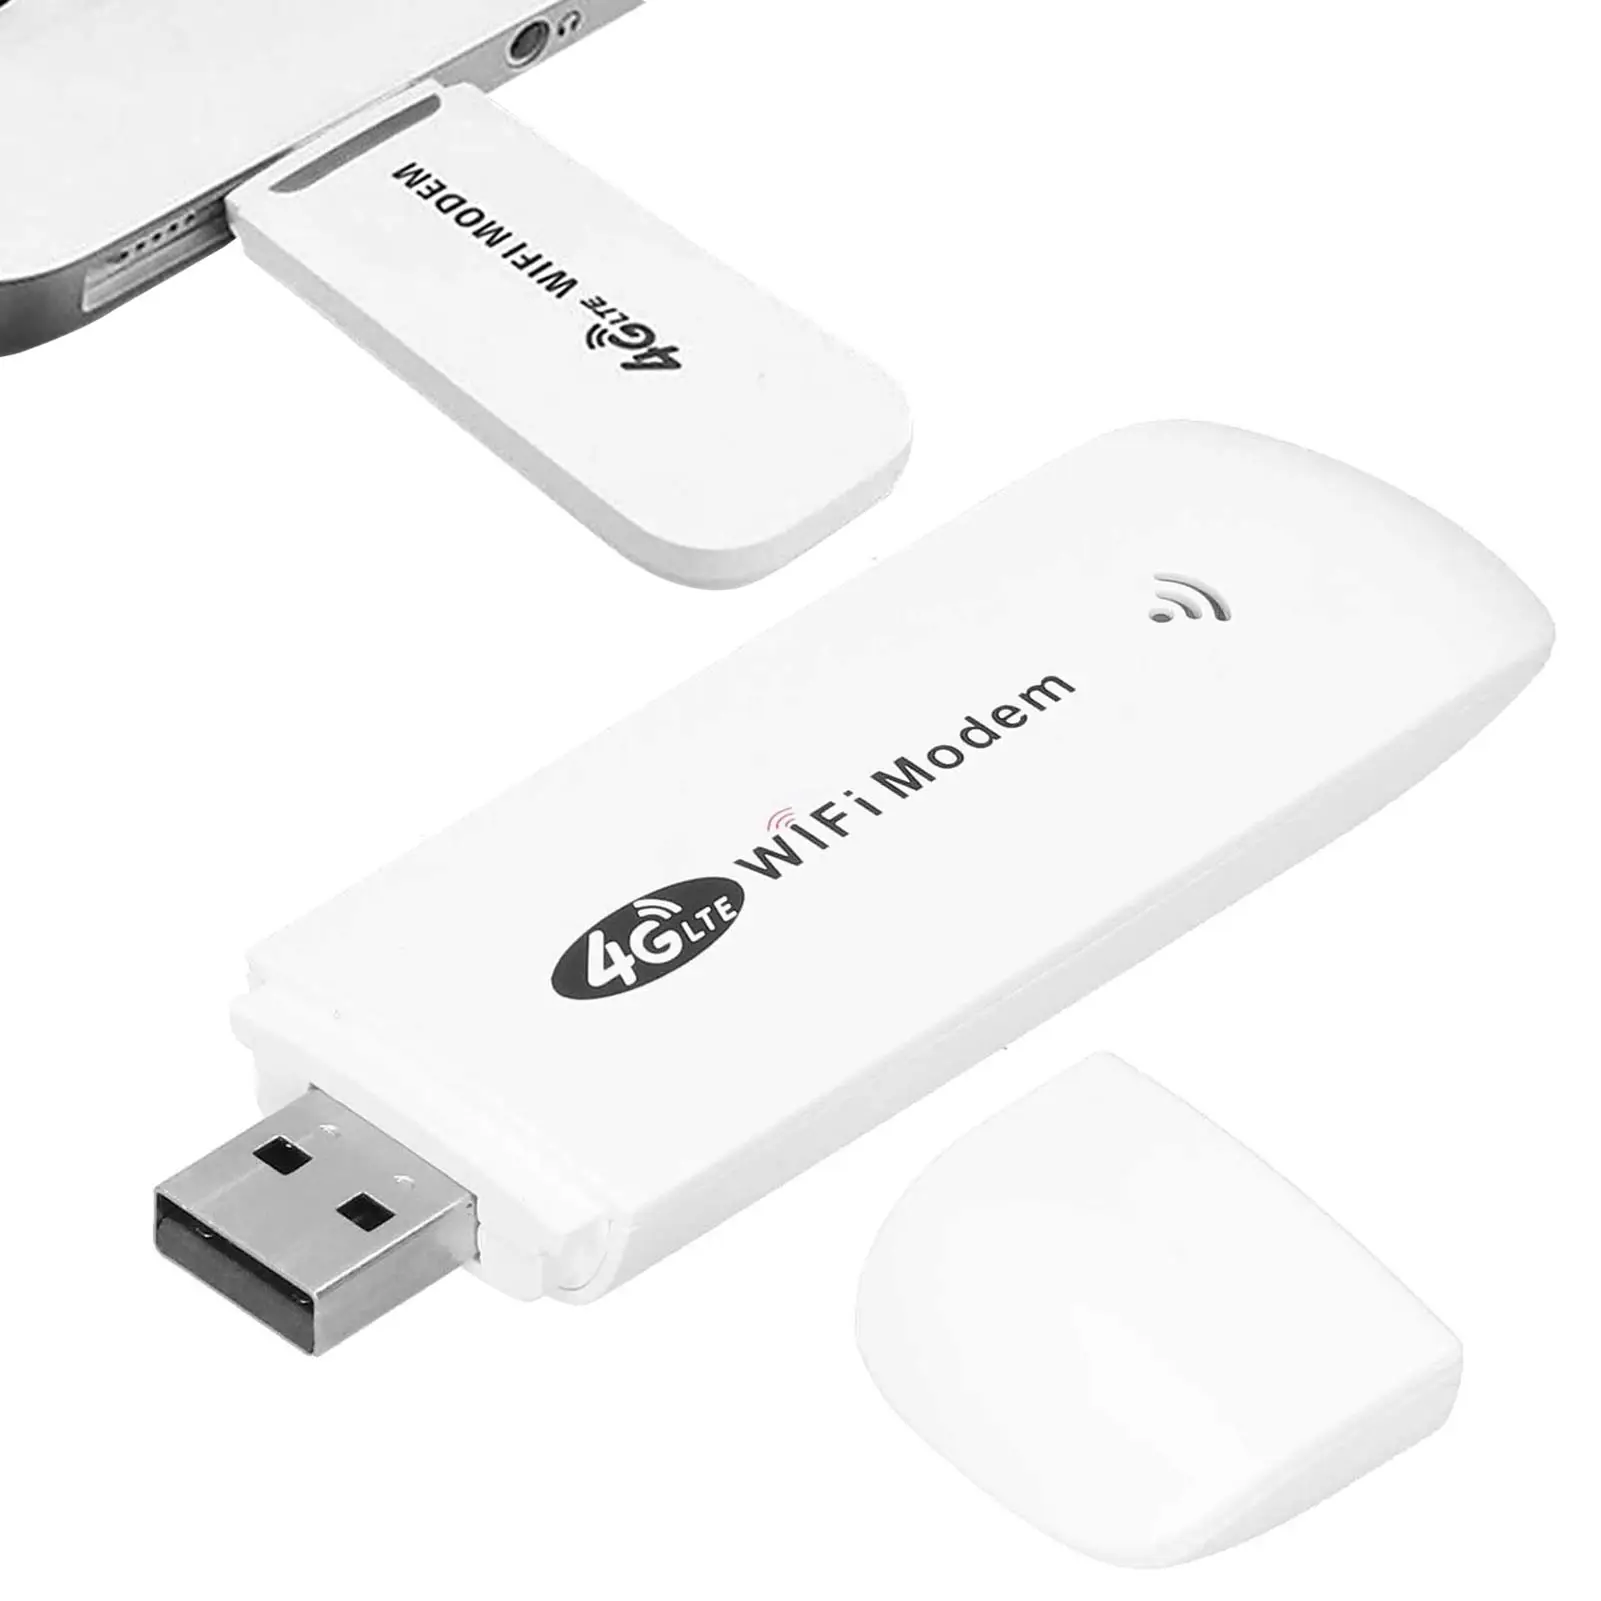 

USB WiFi Adapter Mini 4G WiFi Dongle Wireless Network Adapter For Desktop Computers Laptops Smartphones For Windows Linux Kernel